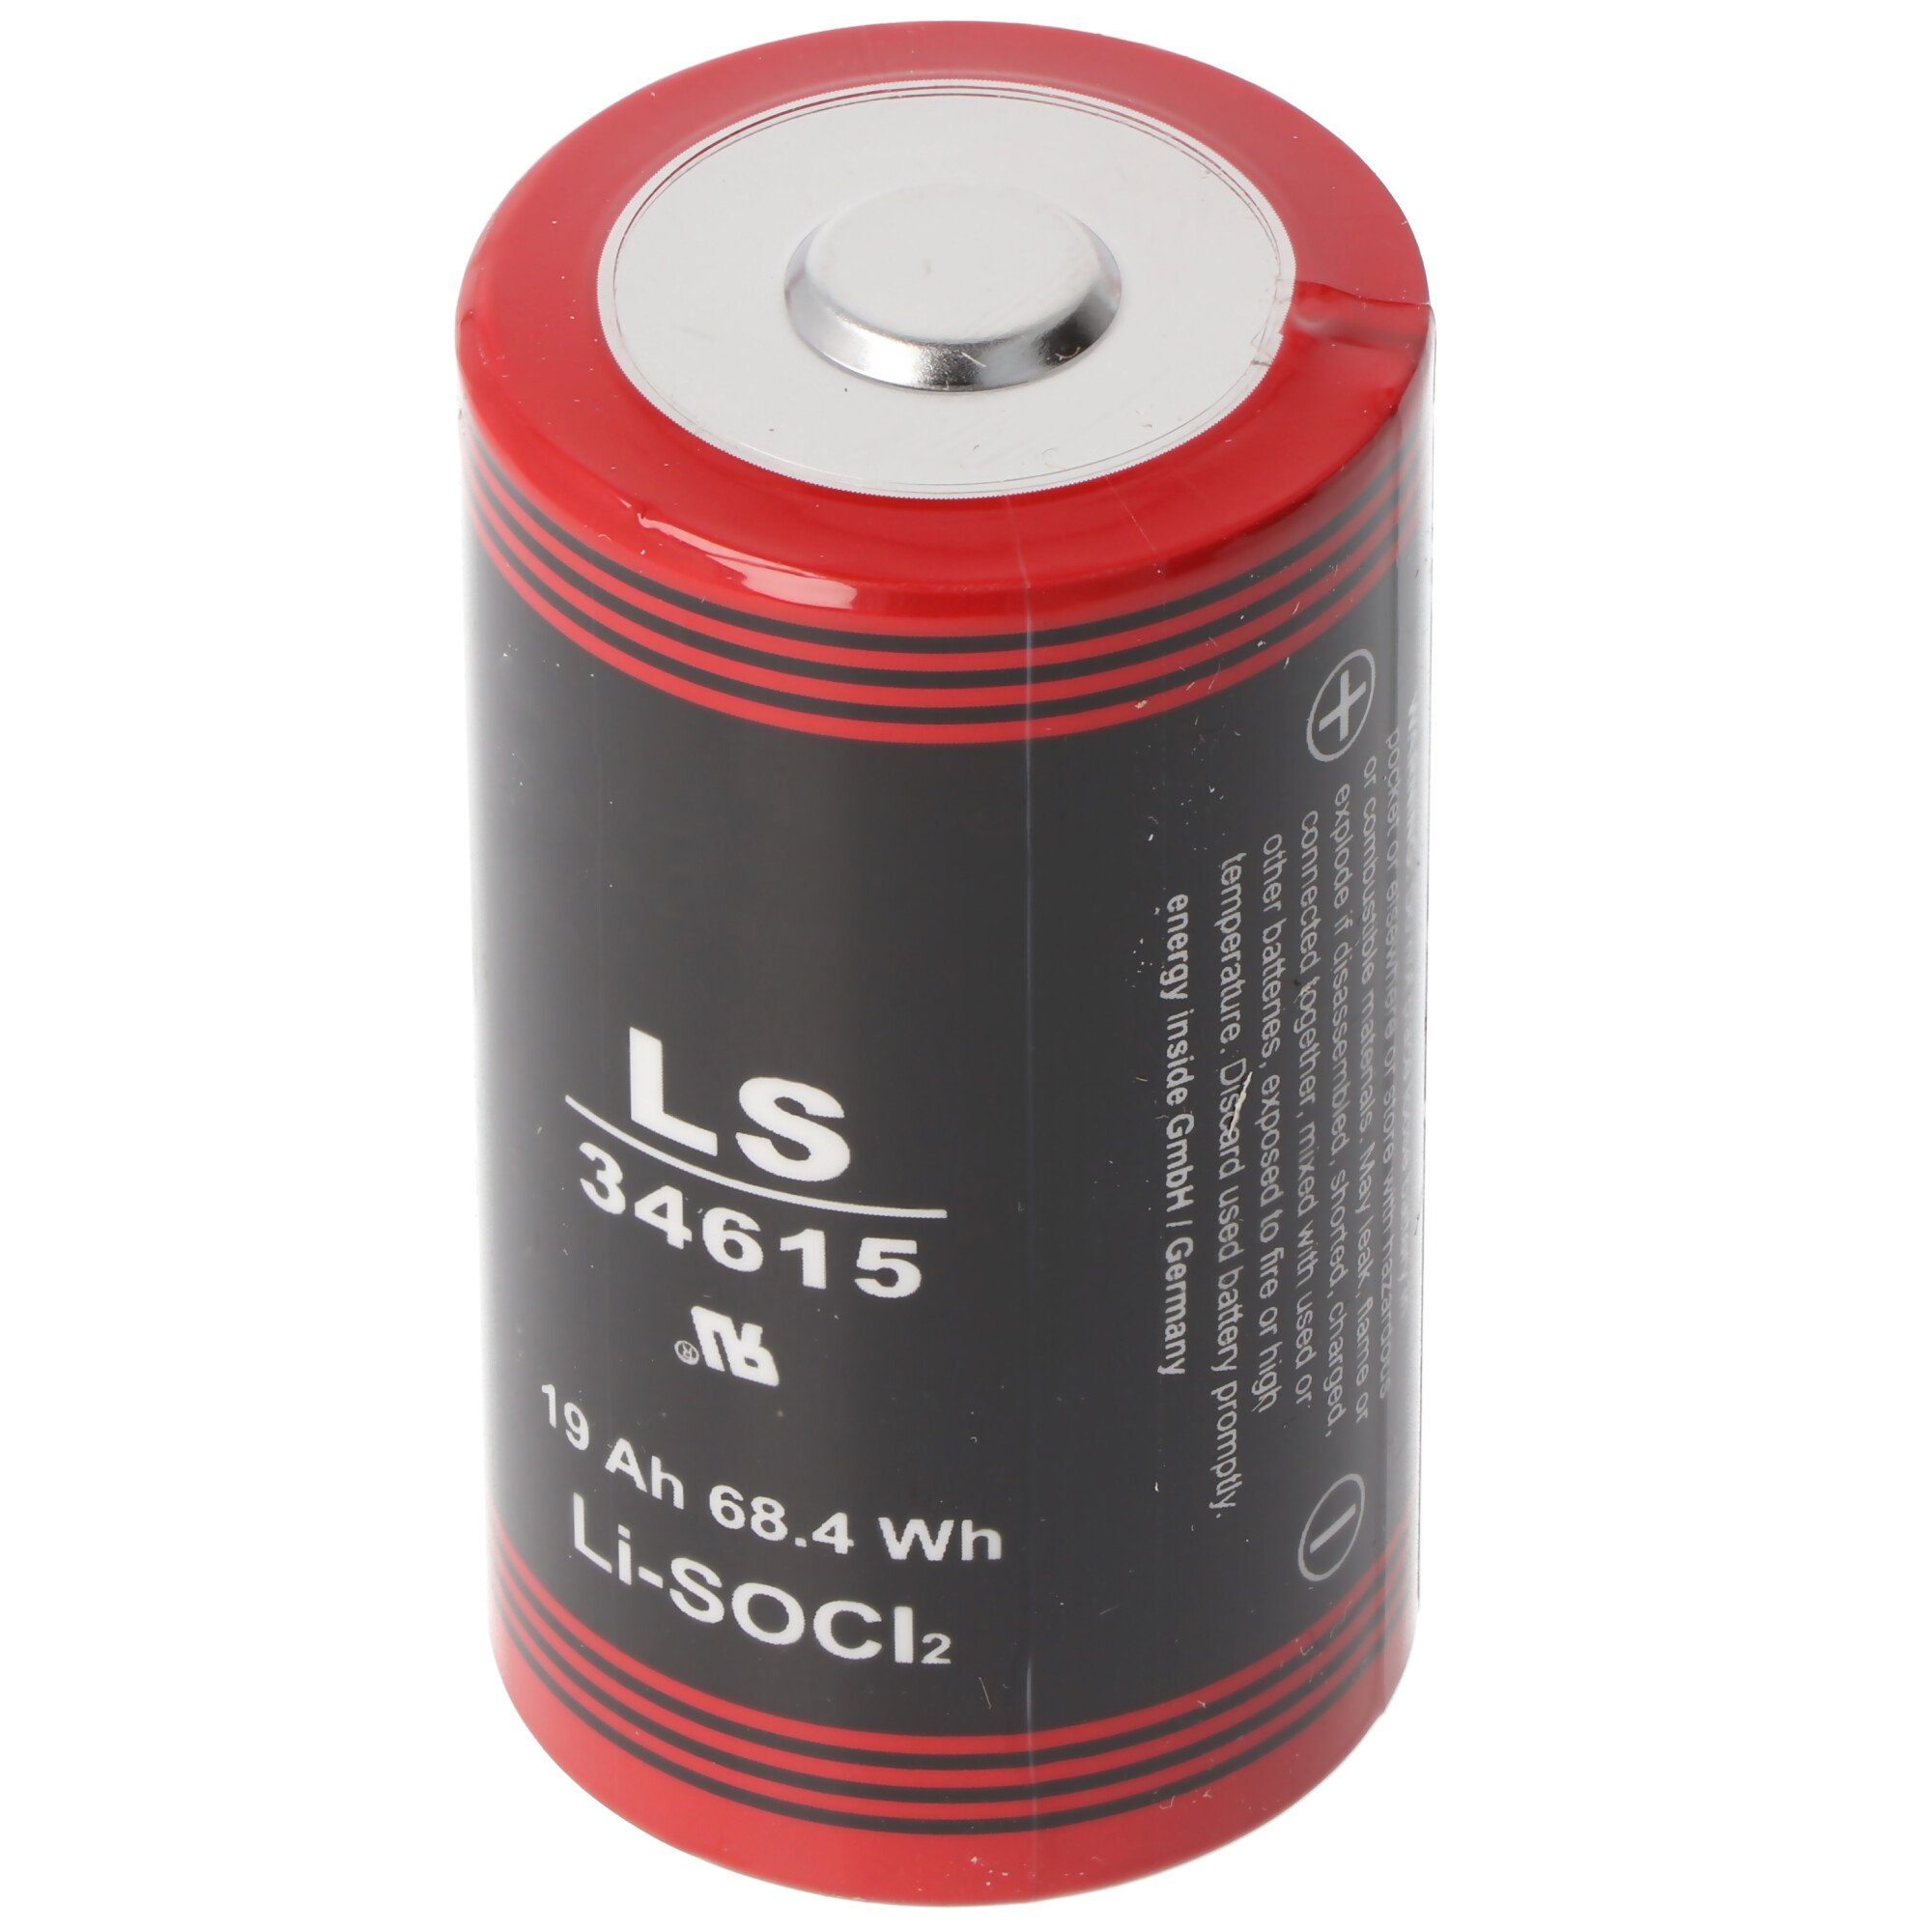 AccuCell ER34615 Lithium Batterie D Mono 3,6 Volt 19000mAh mit breitem Pluspol Batterie, (3,6 V)